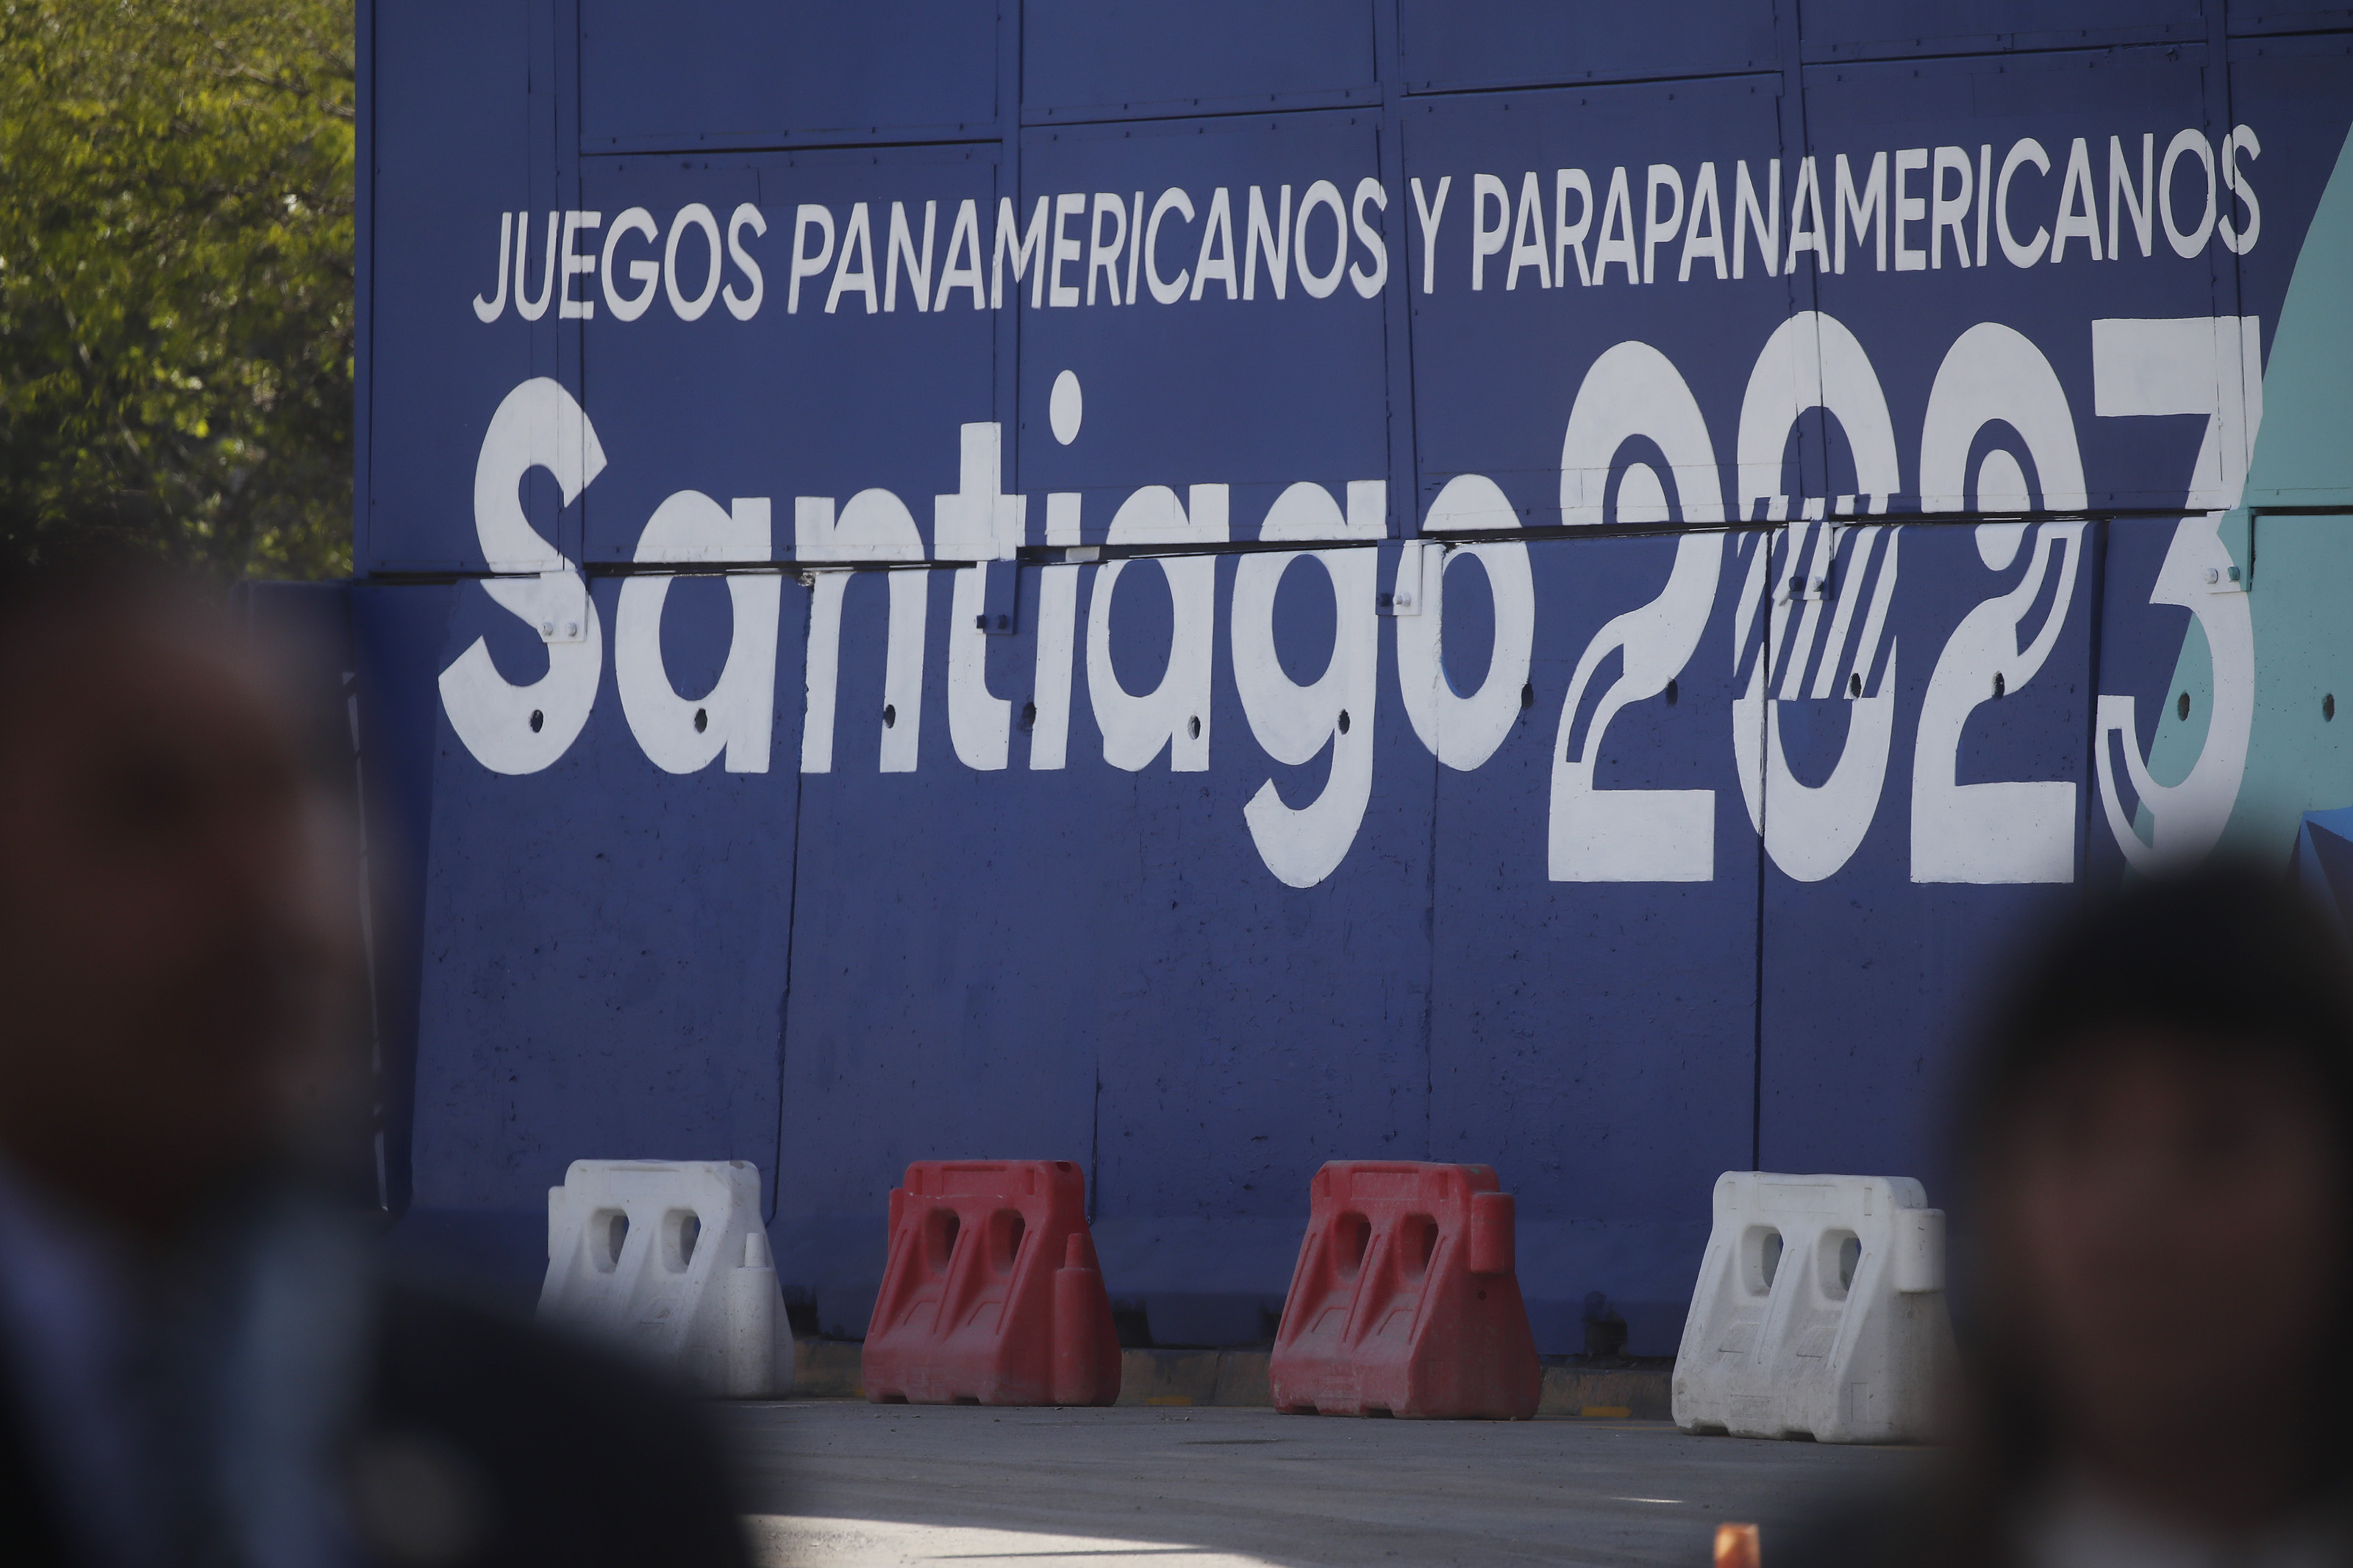 Santiago 2023